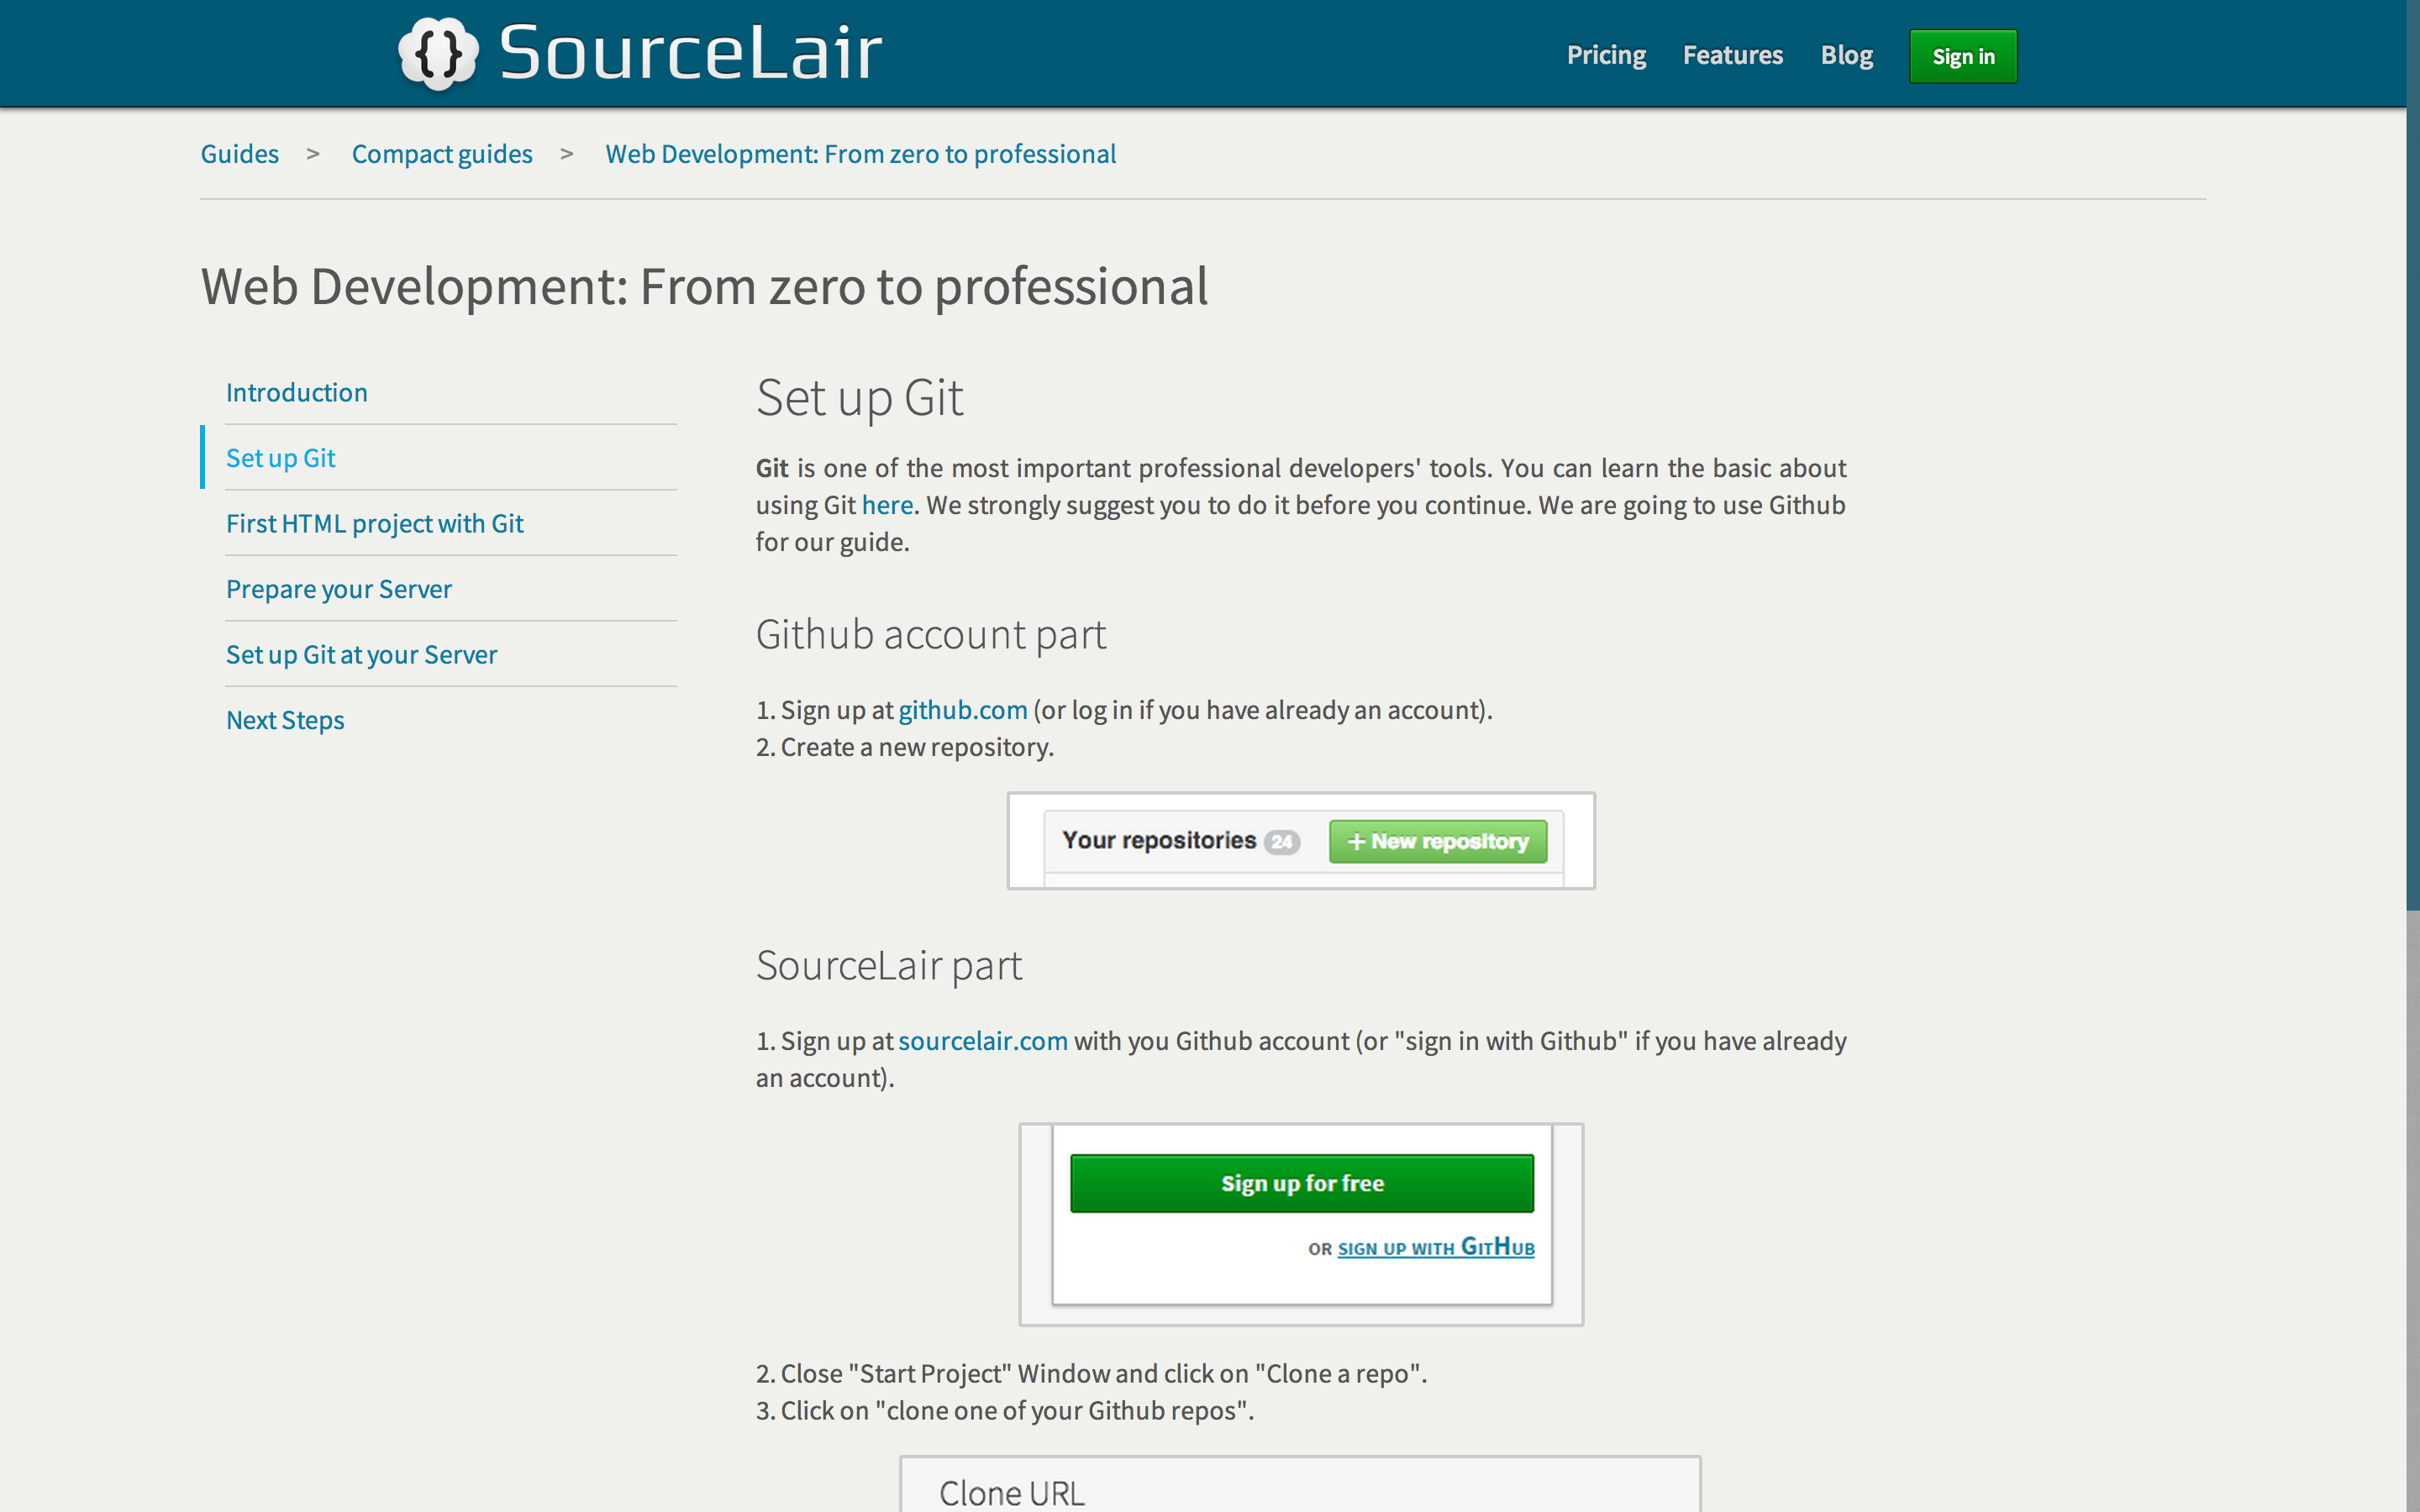 Web Development: From zero to professional